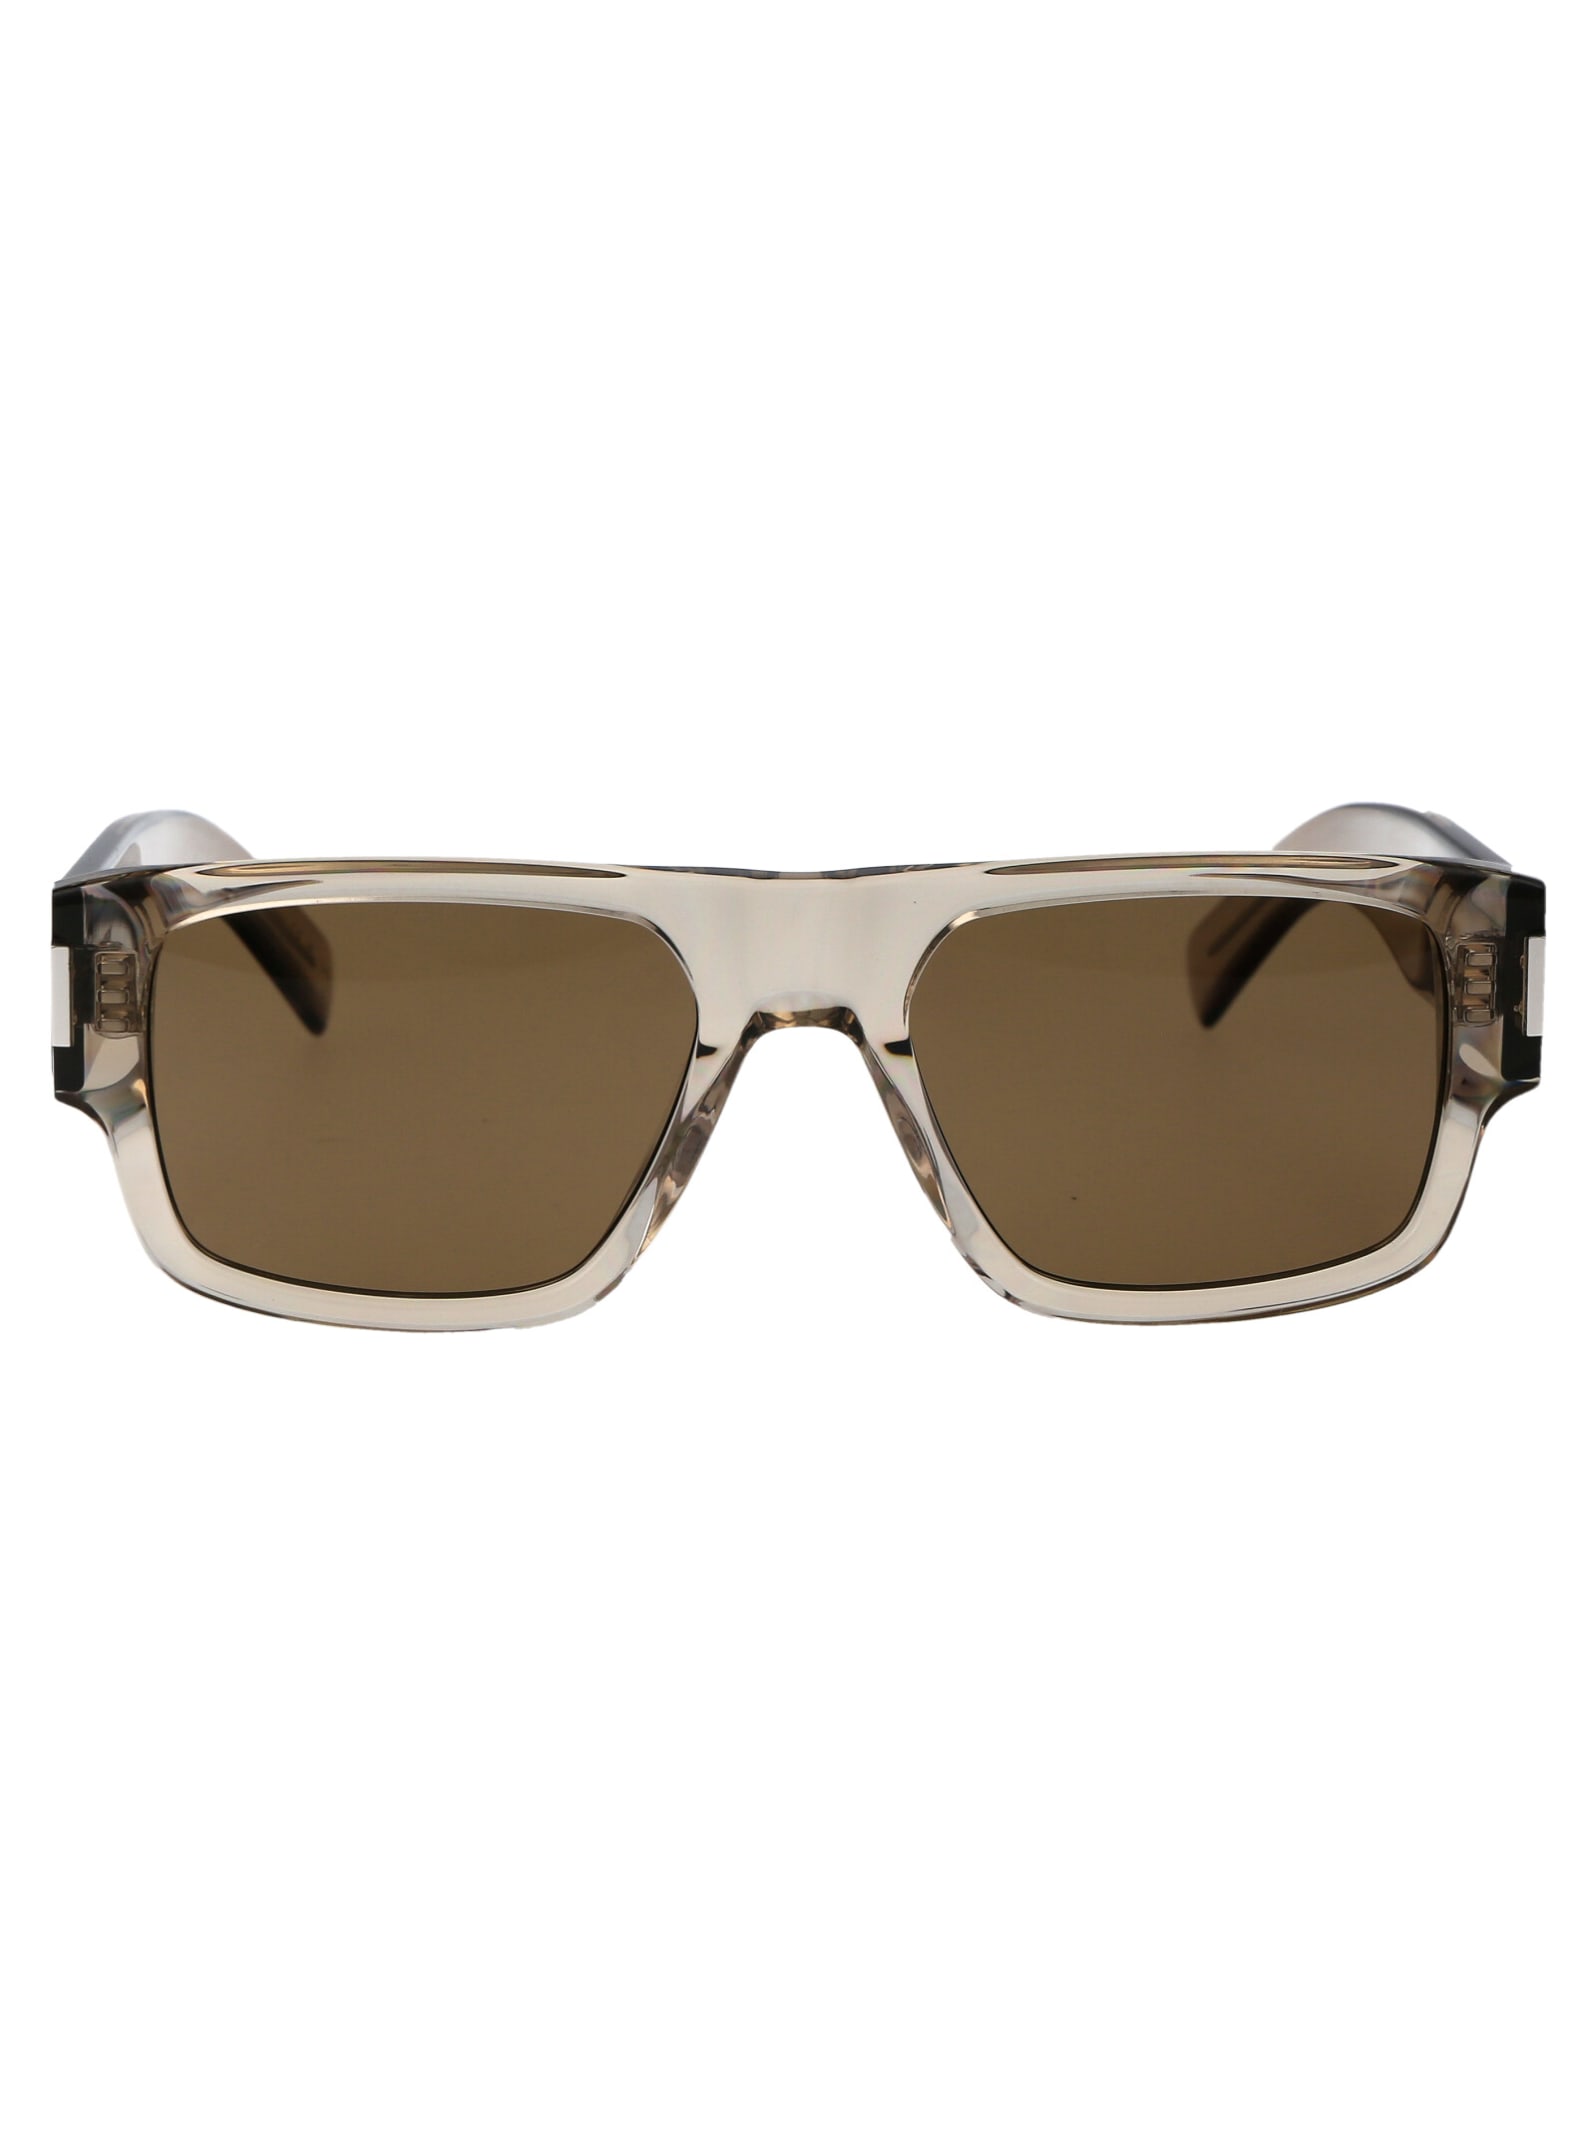 Sl 659 Sunglasses